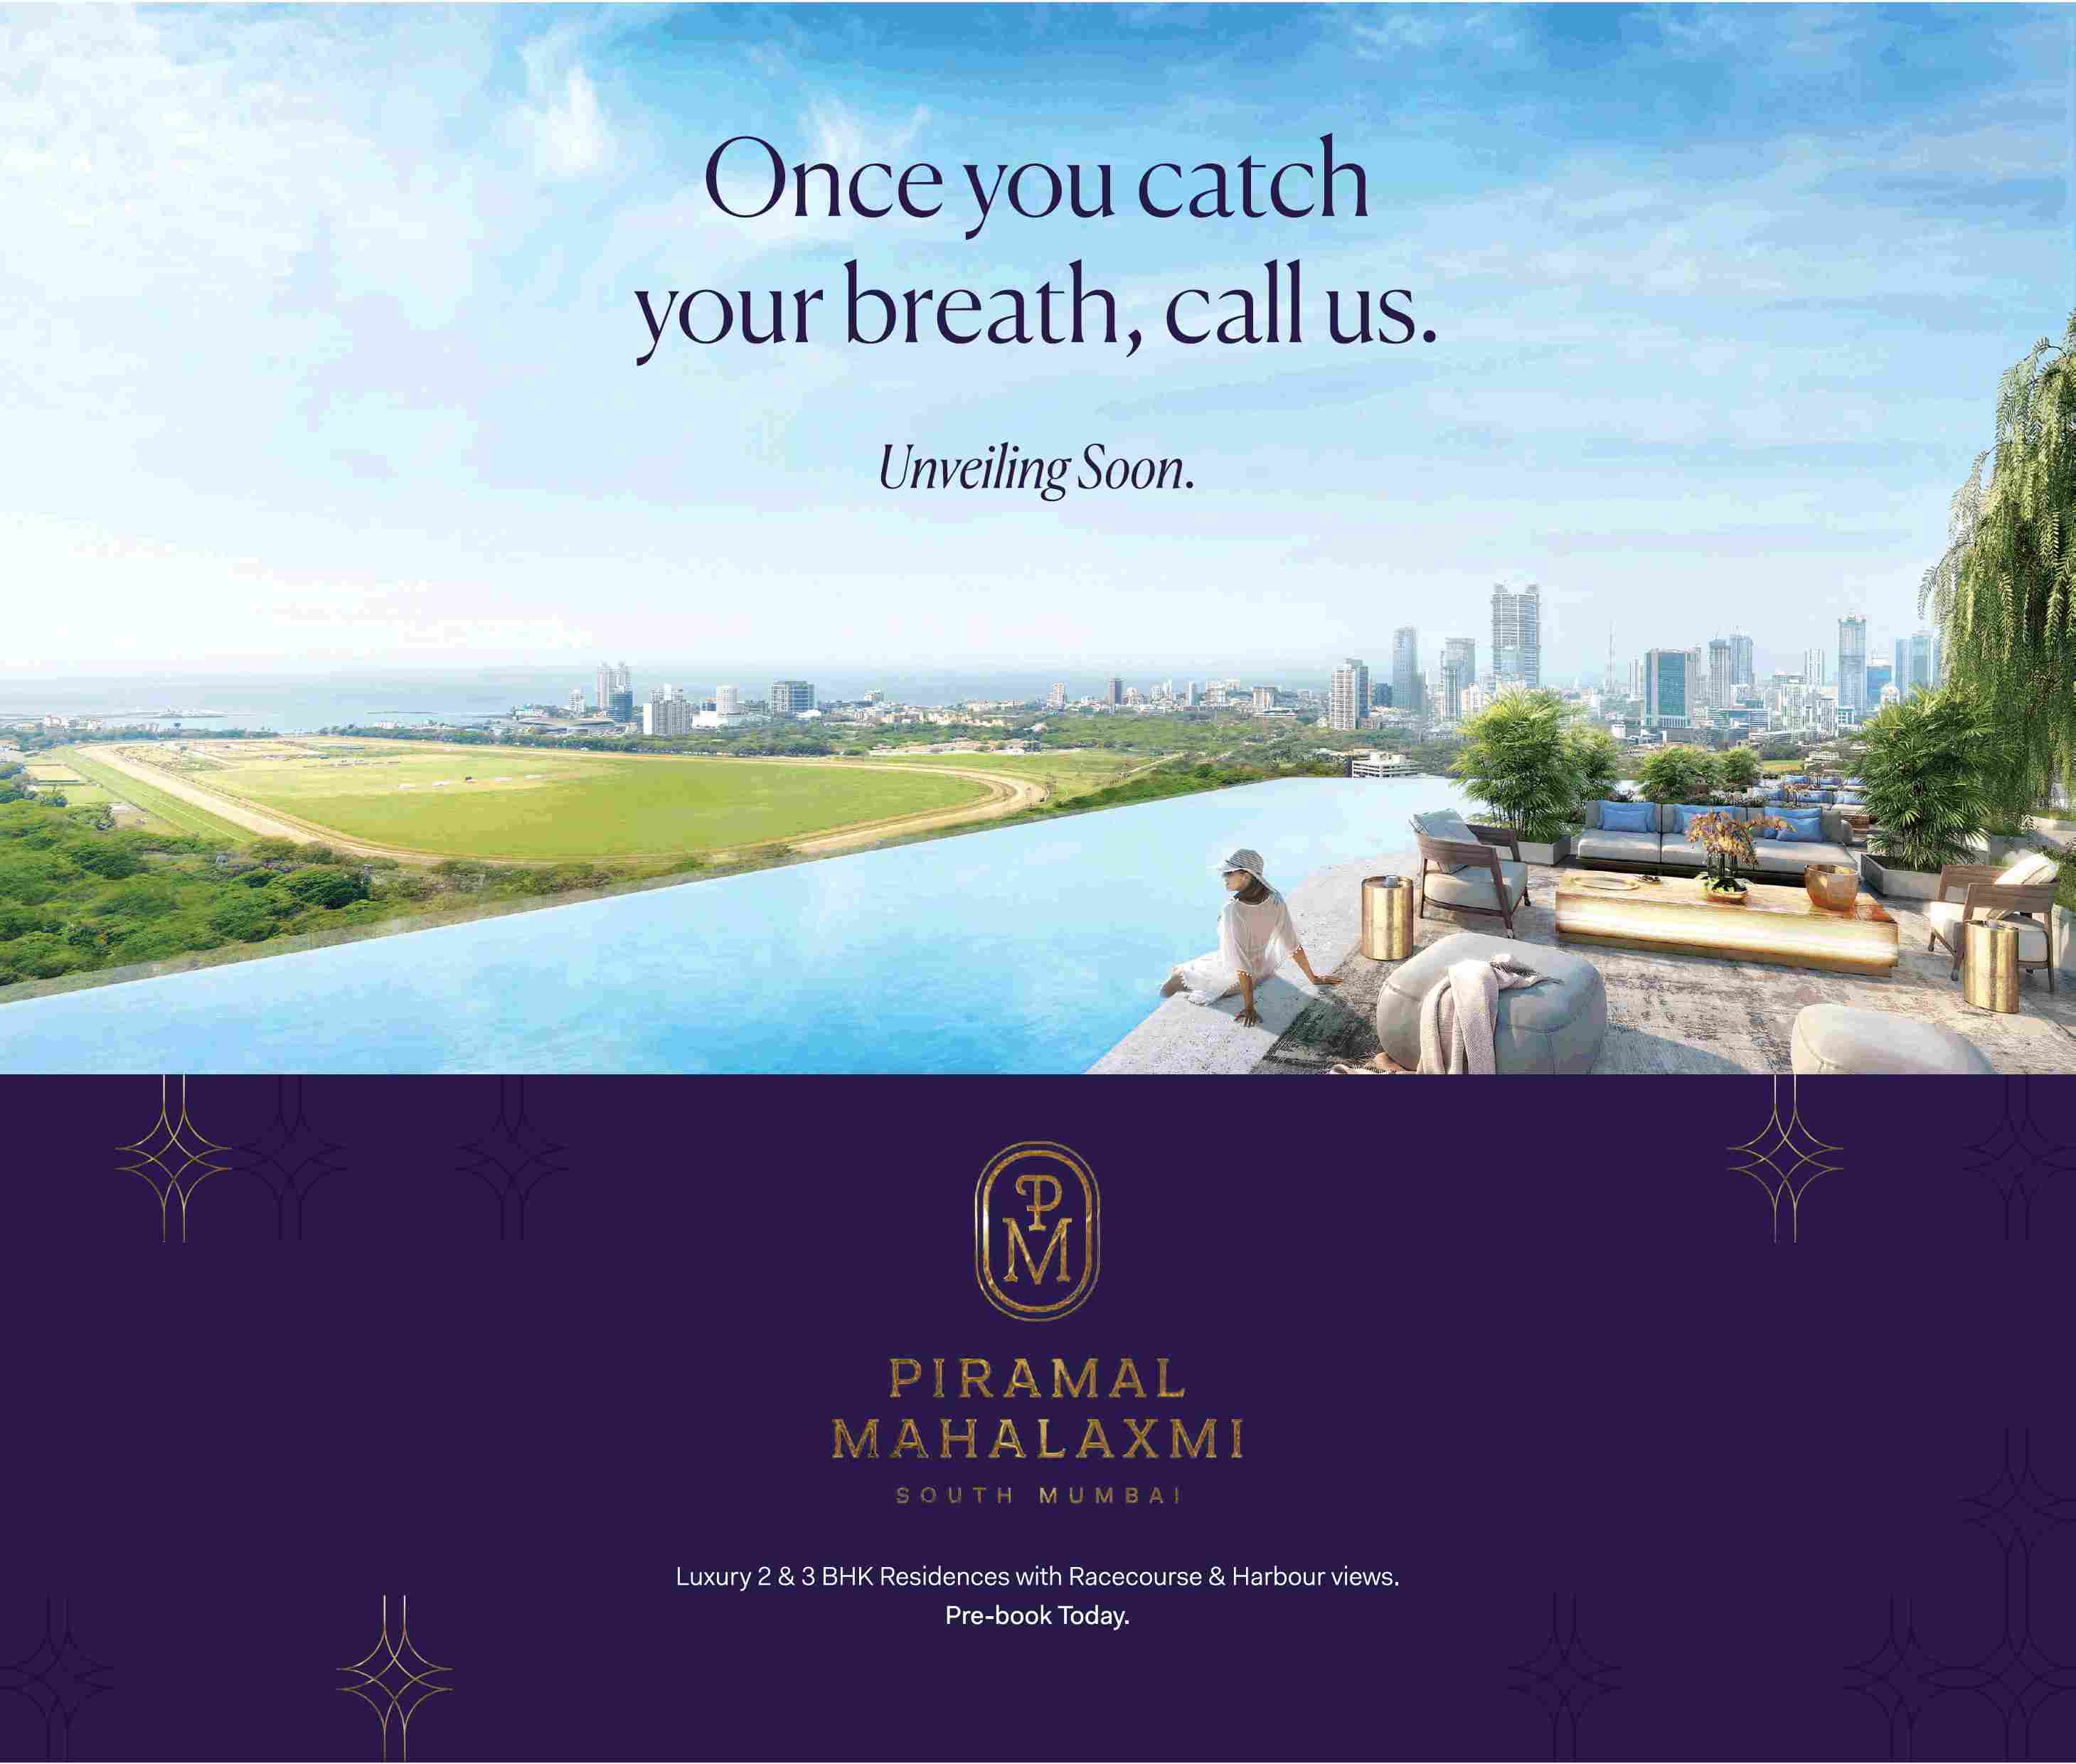 Presenting luxury 2 & 3 BHK with racecourse & harbour views at Piramal Mahalaxmi in Mumbai Update